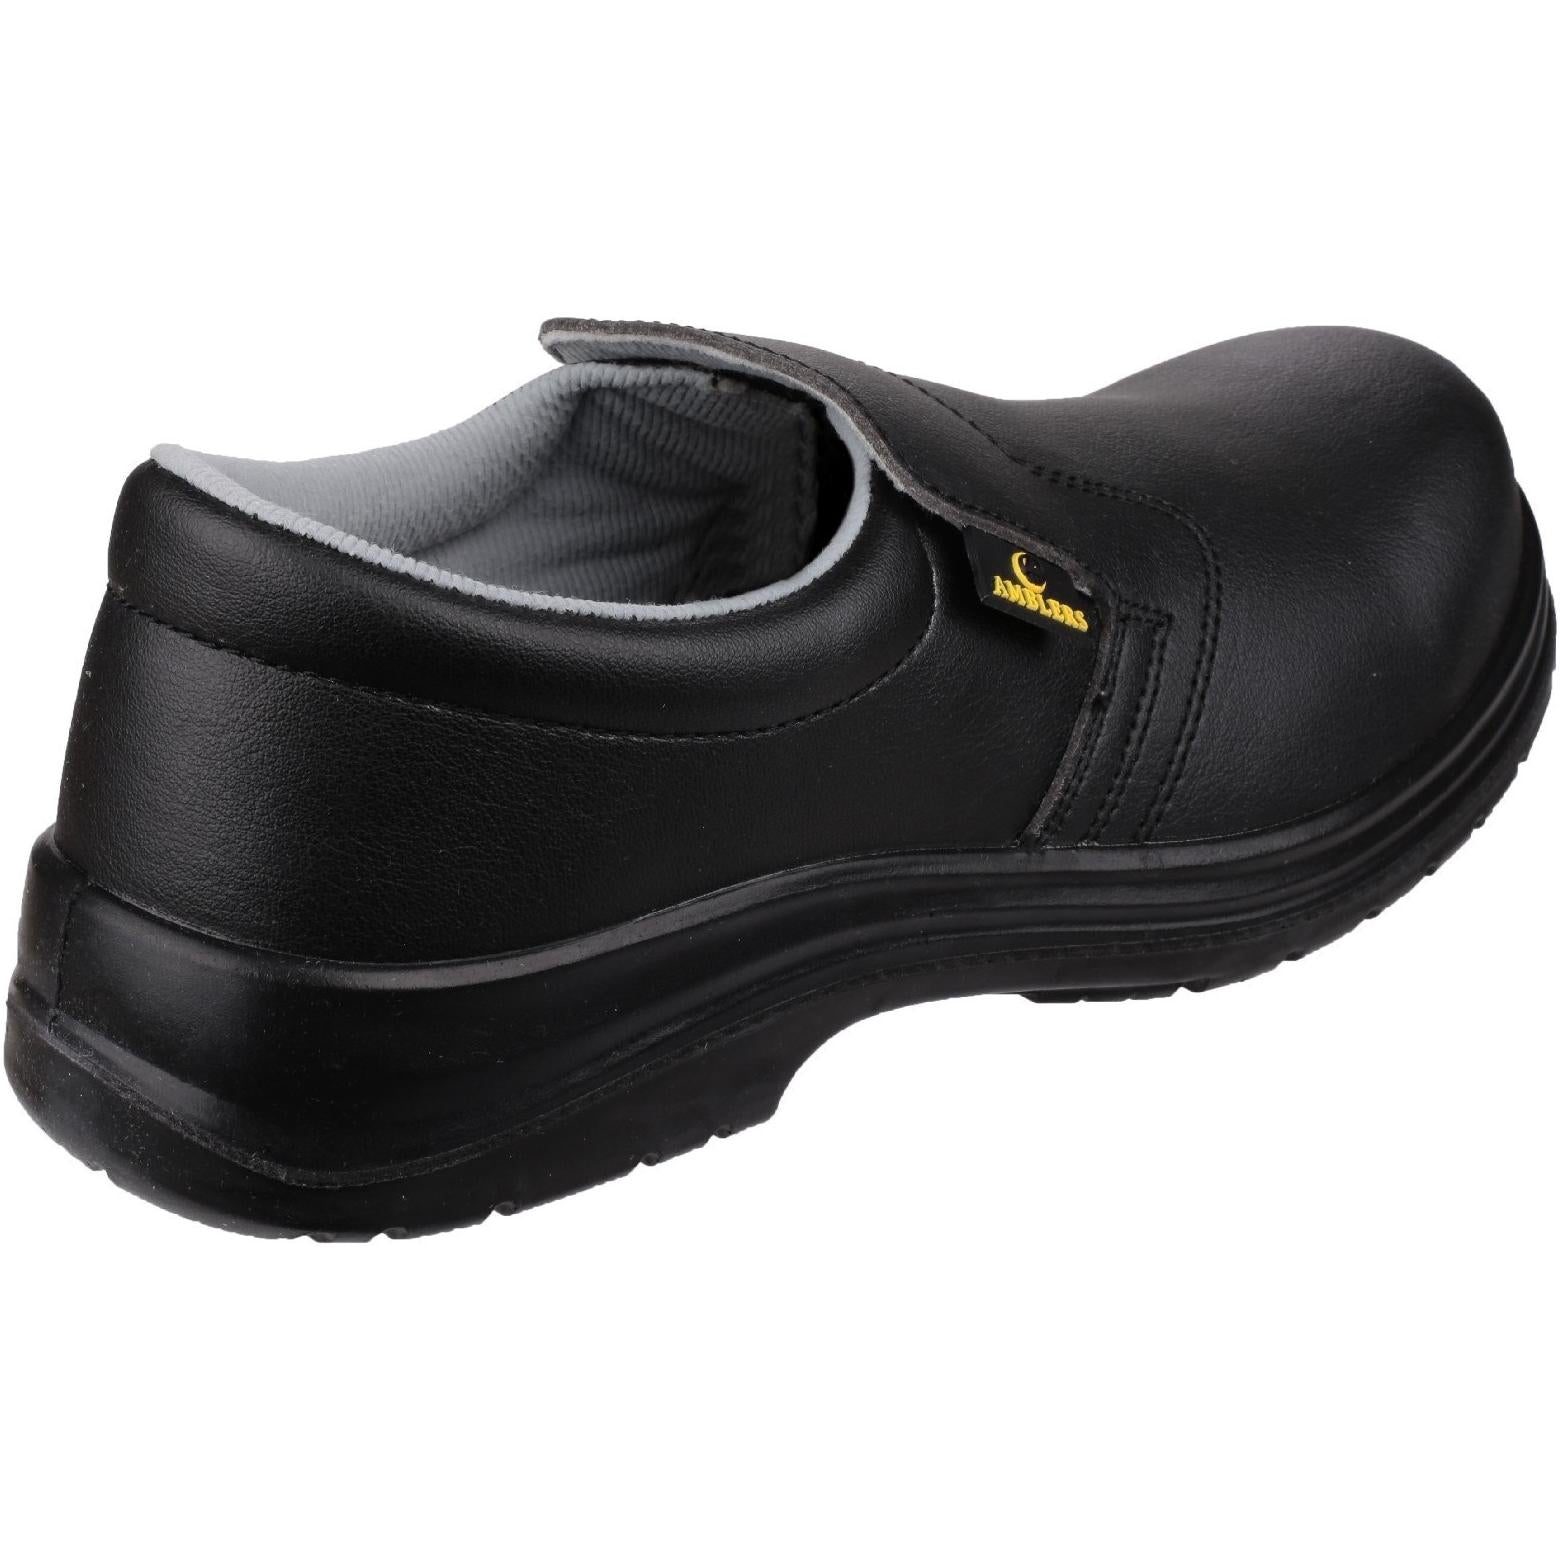 Amblers Safety FS661 Metal Free Lightweight safety Shoe